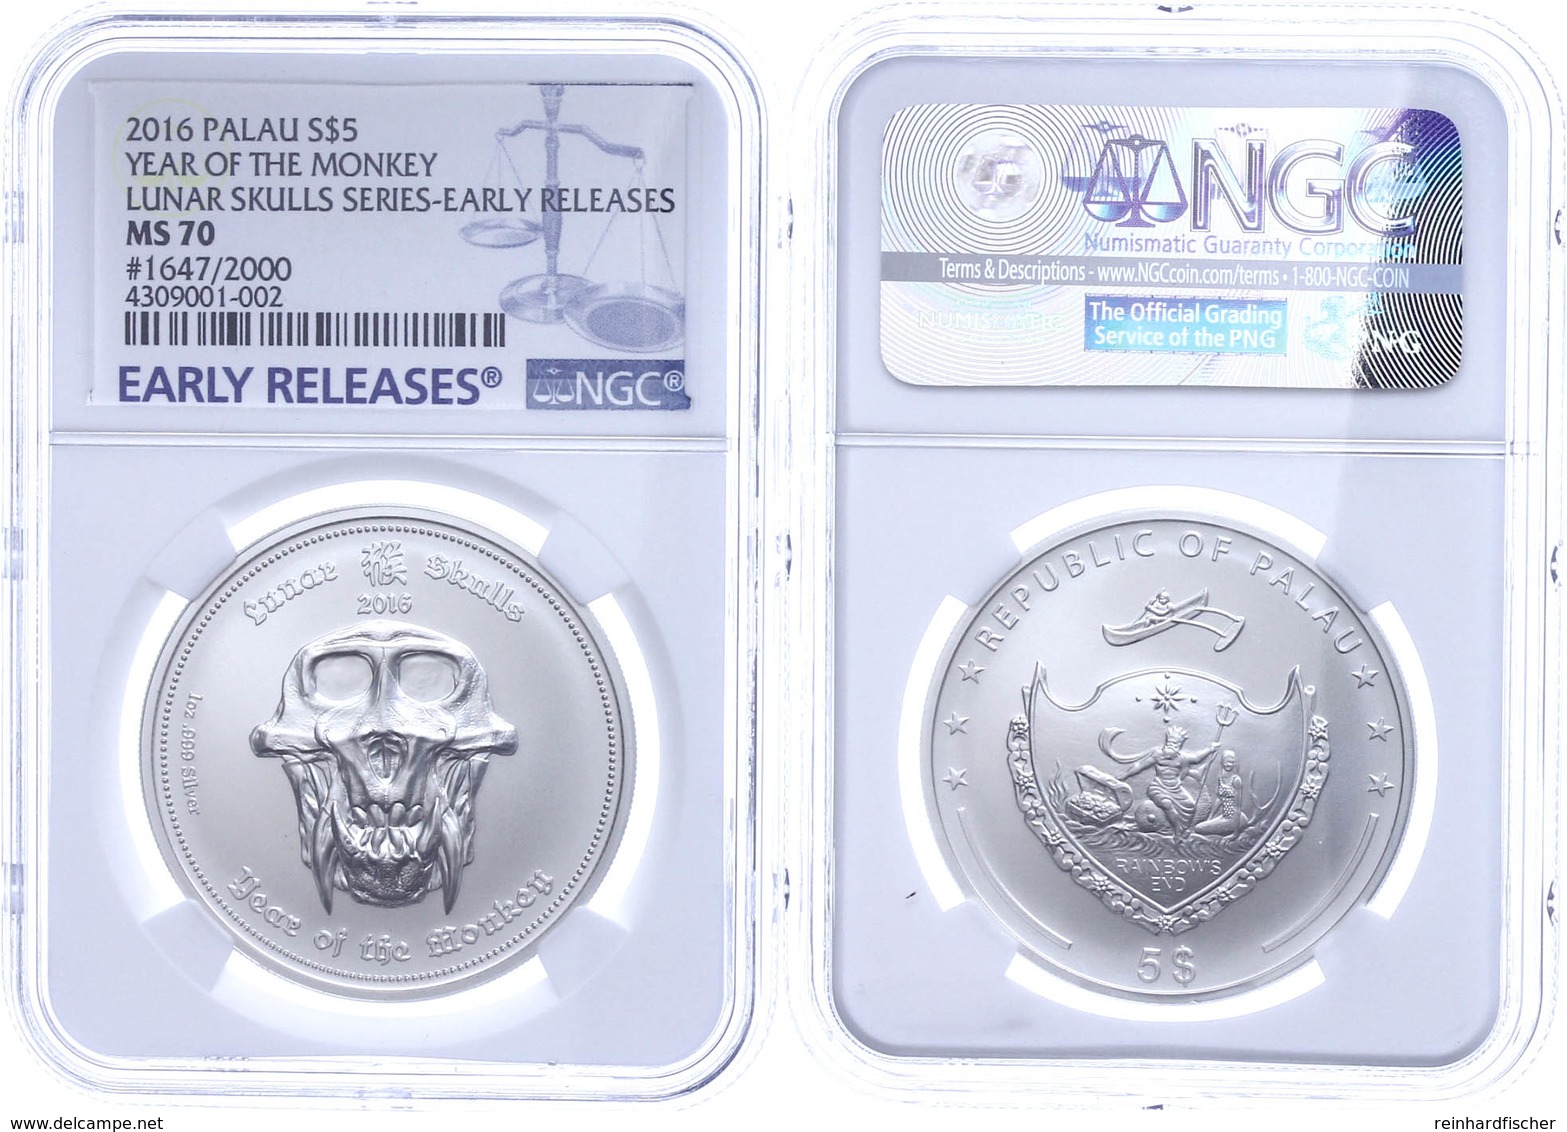 5 Dollars, 2015, Lunar Skulls Series-Year Of The Monkey, In Slab Der NGC Mit Der Bewertung MS70, Early Releases. - Palau